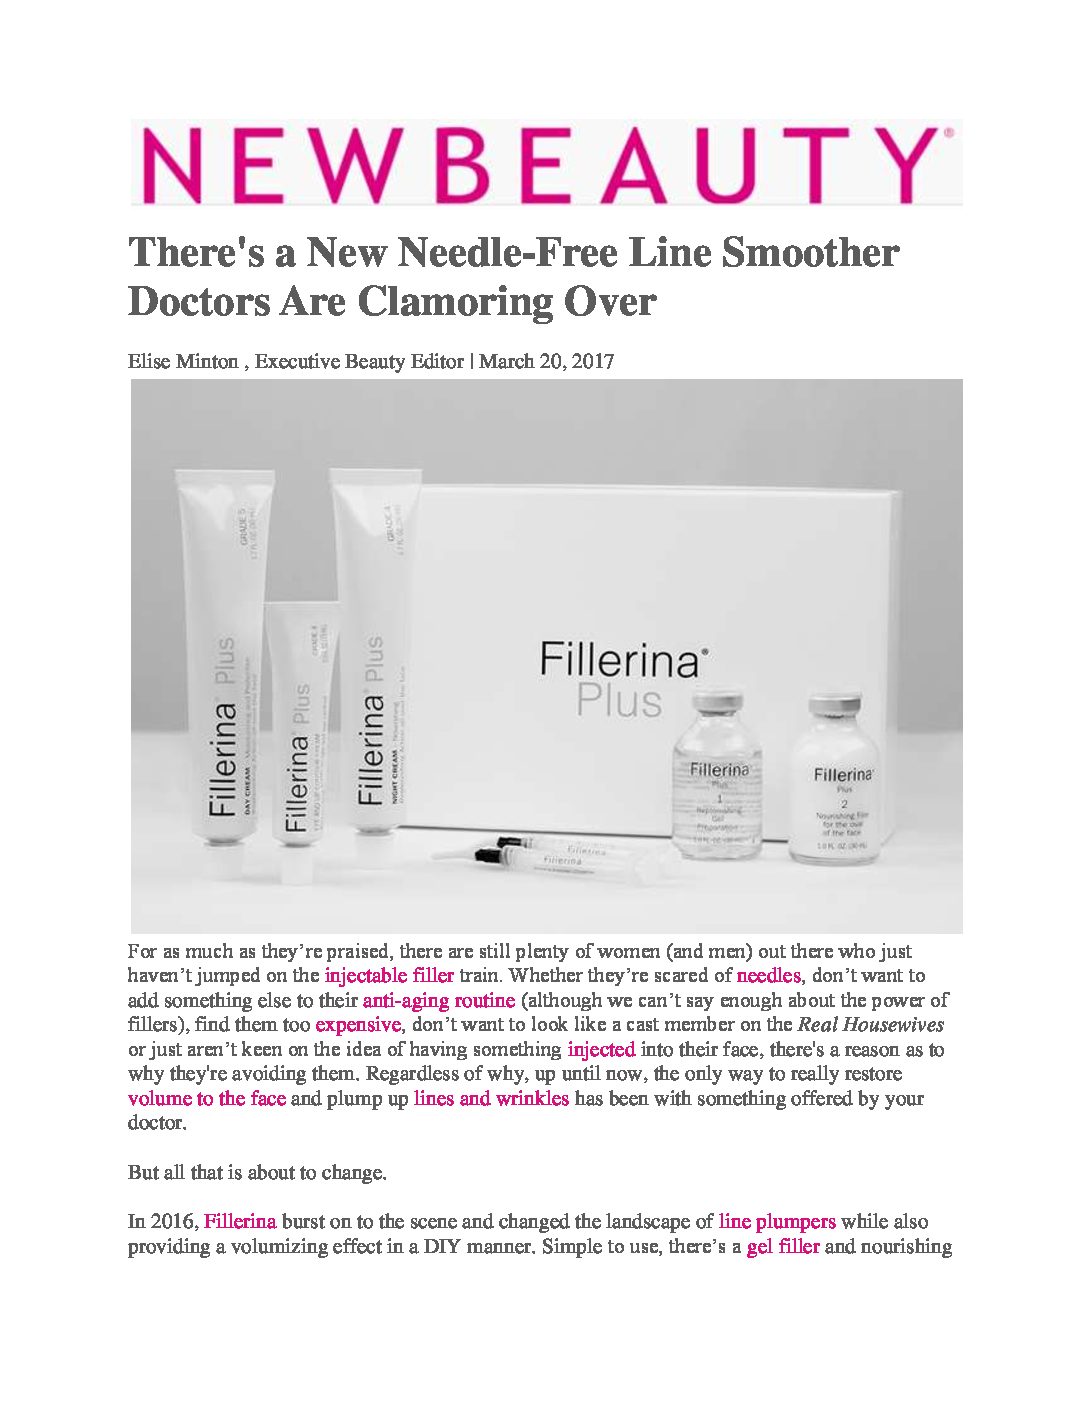 NewBeauty Launches Fillerina PLUS